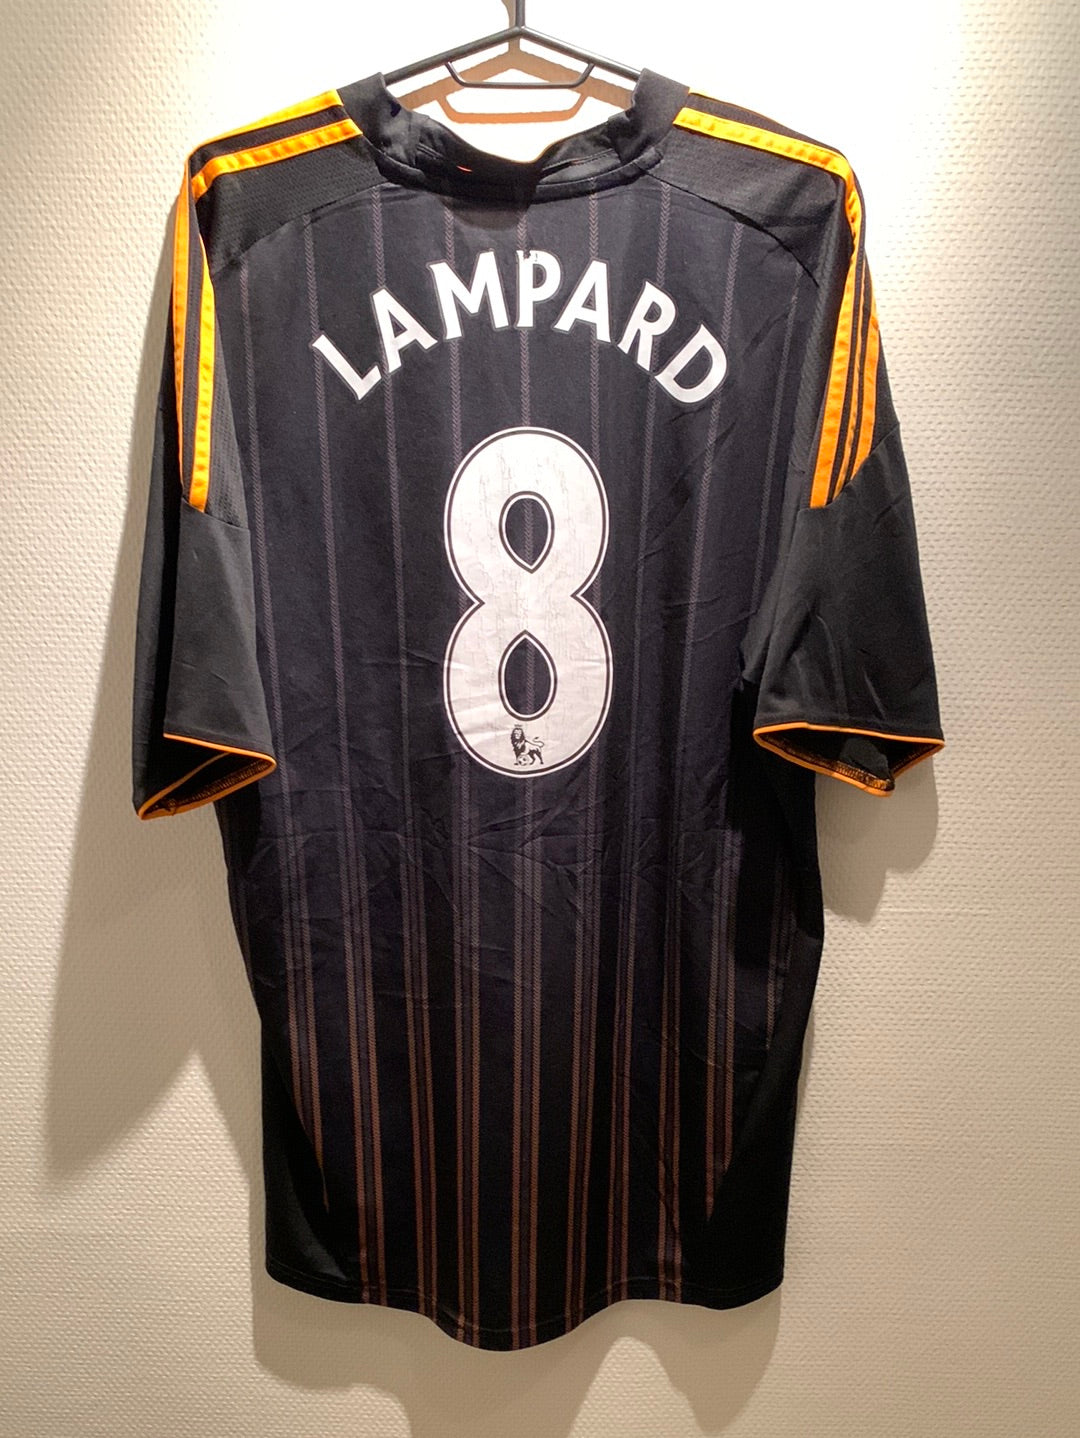 Chelsea Away 10/11 Lampard 8